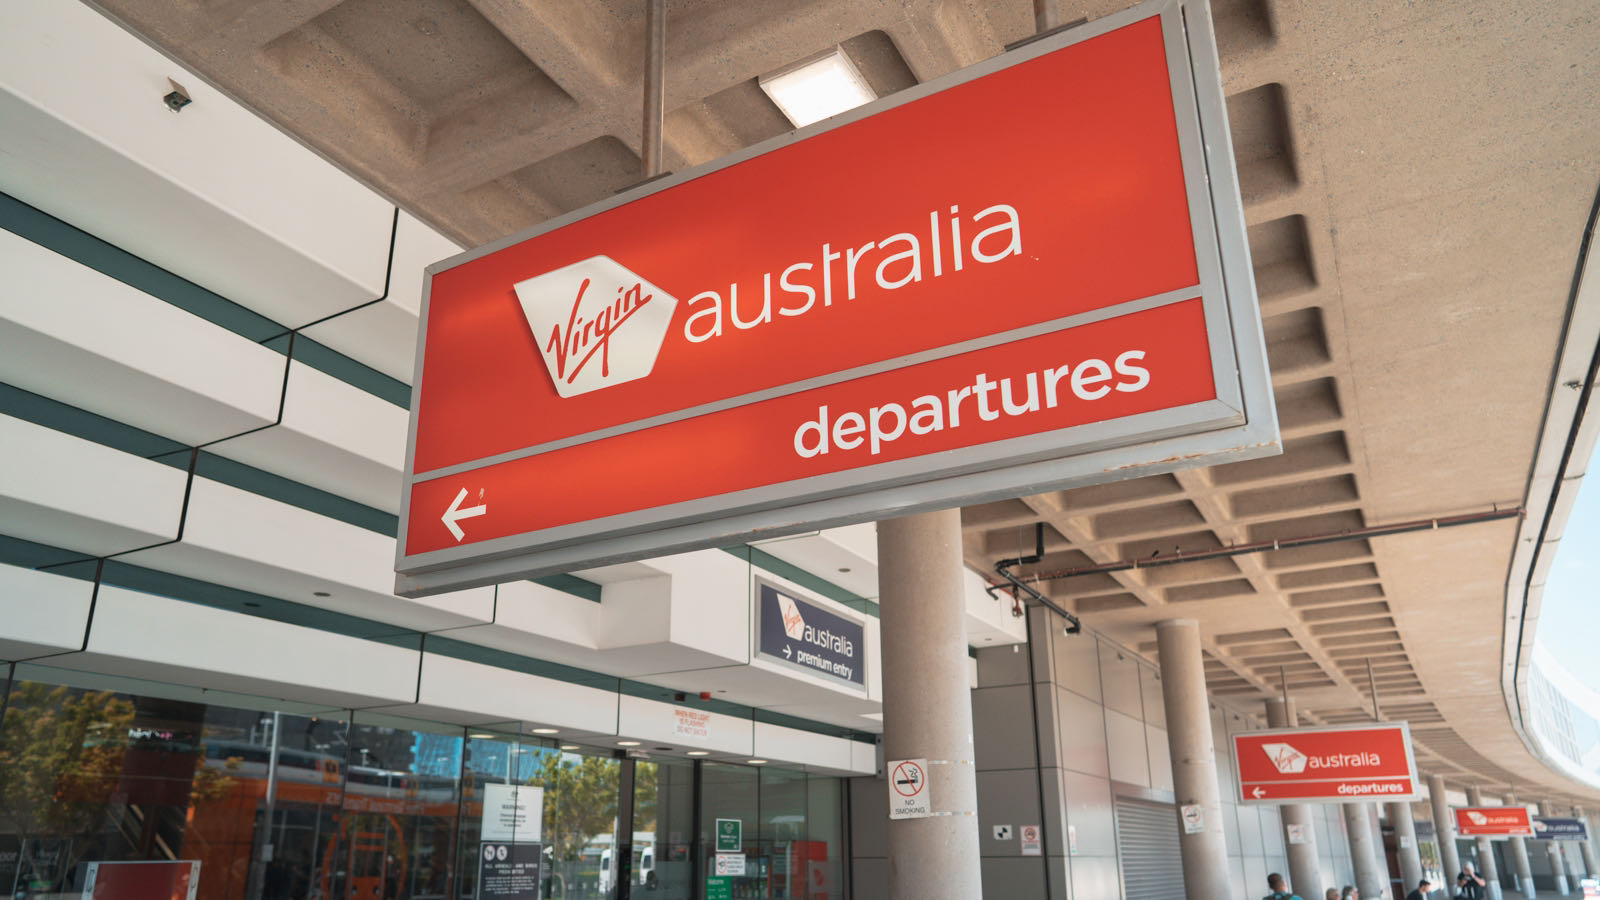 Virgin Australia Departure area